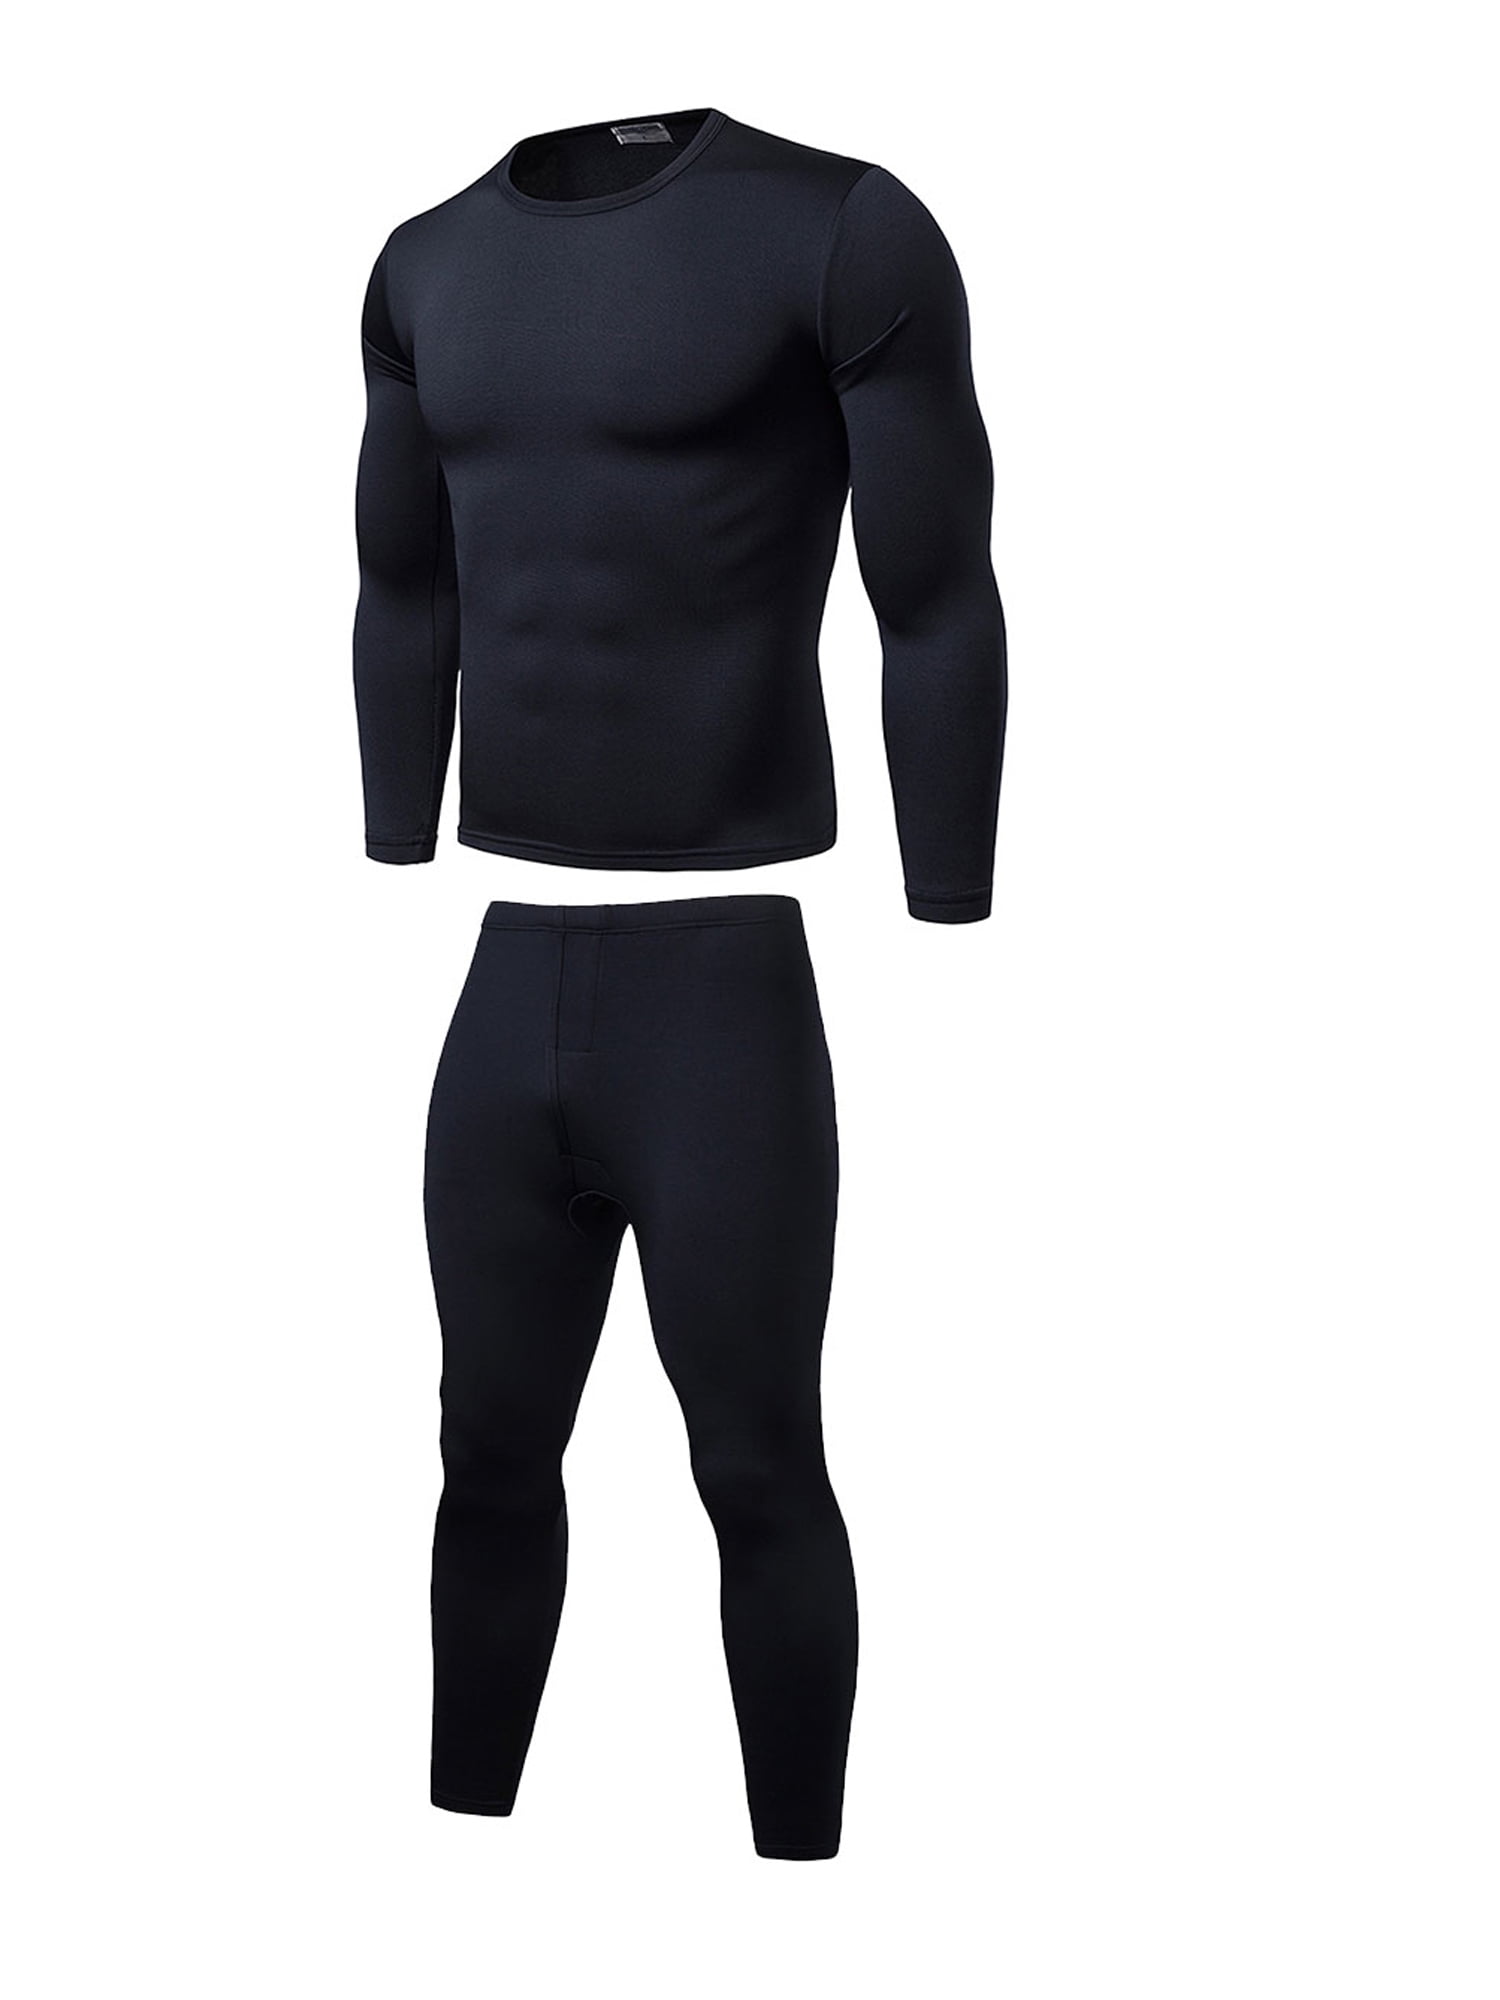 Sunisery Men S Winter Thermal Underwear Set Long John Set Comfy Warm Base Tops And Elastic Waist